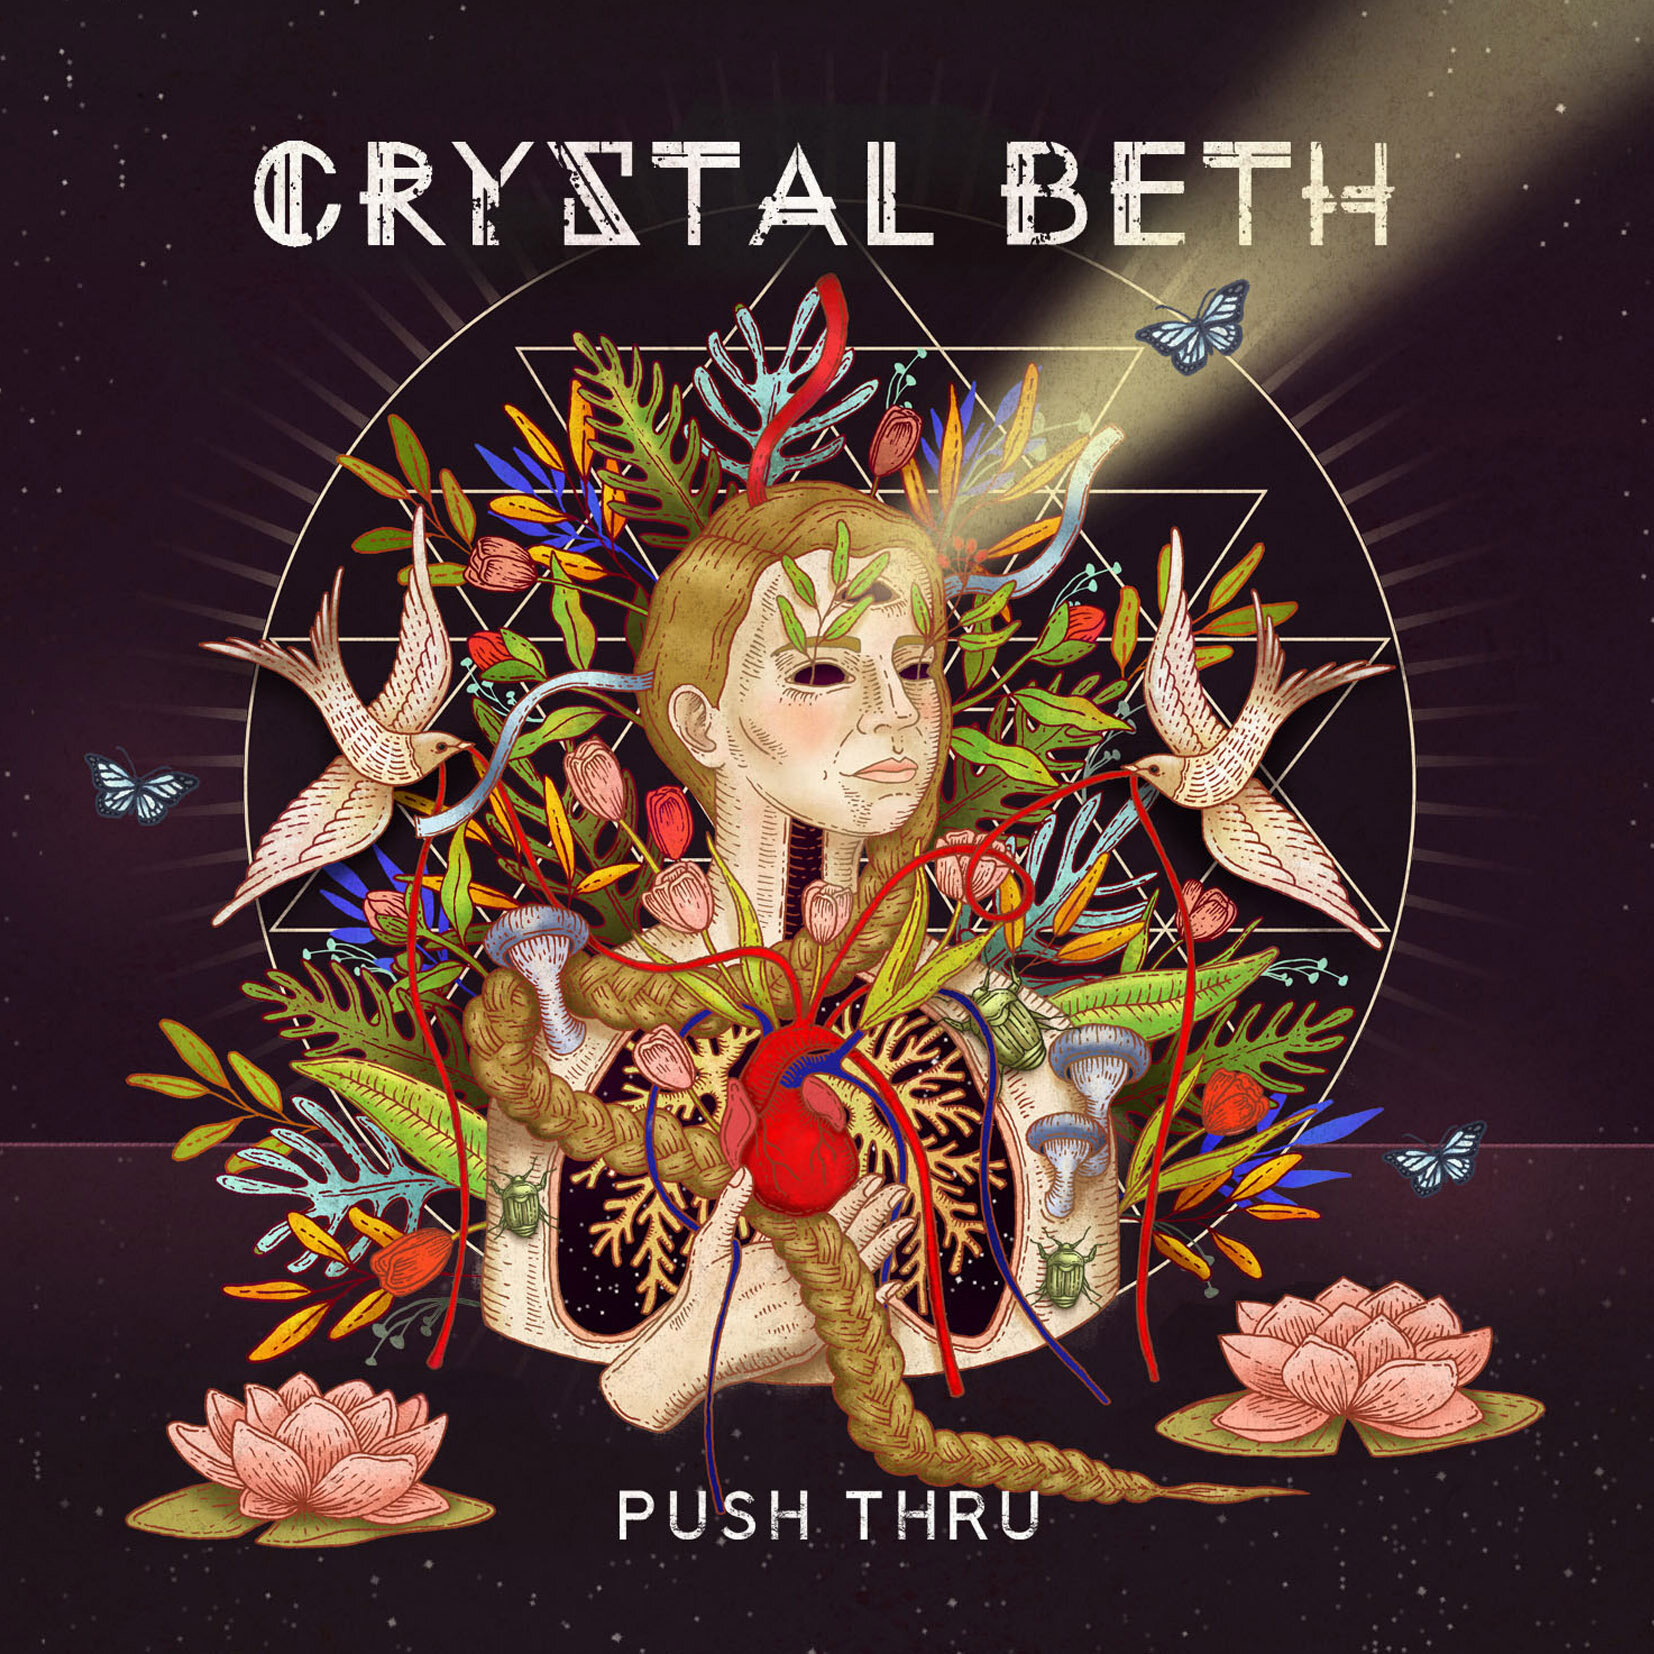  Art for Crystal Beth’s  Push Thru  album by Ale De la Torre. Album cover art for CD and vinyl. 